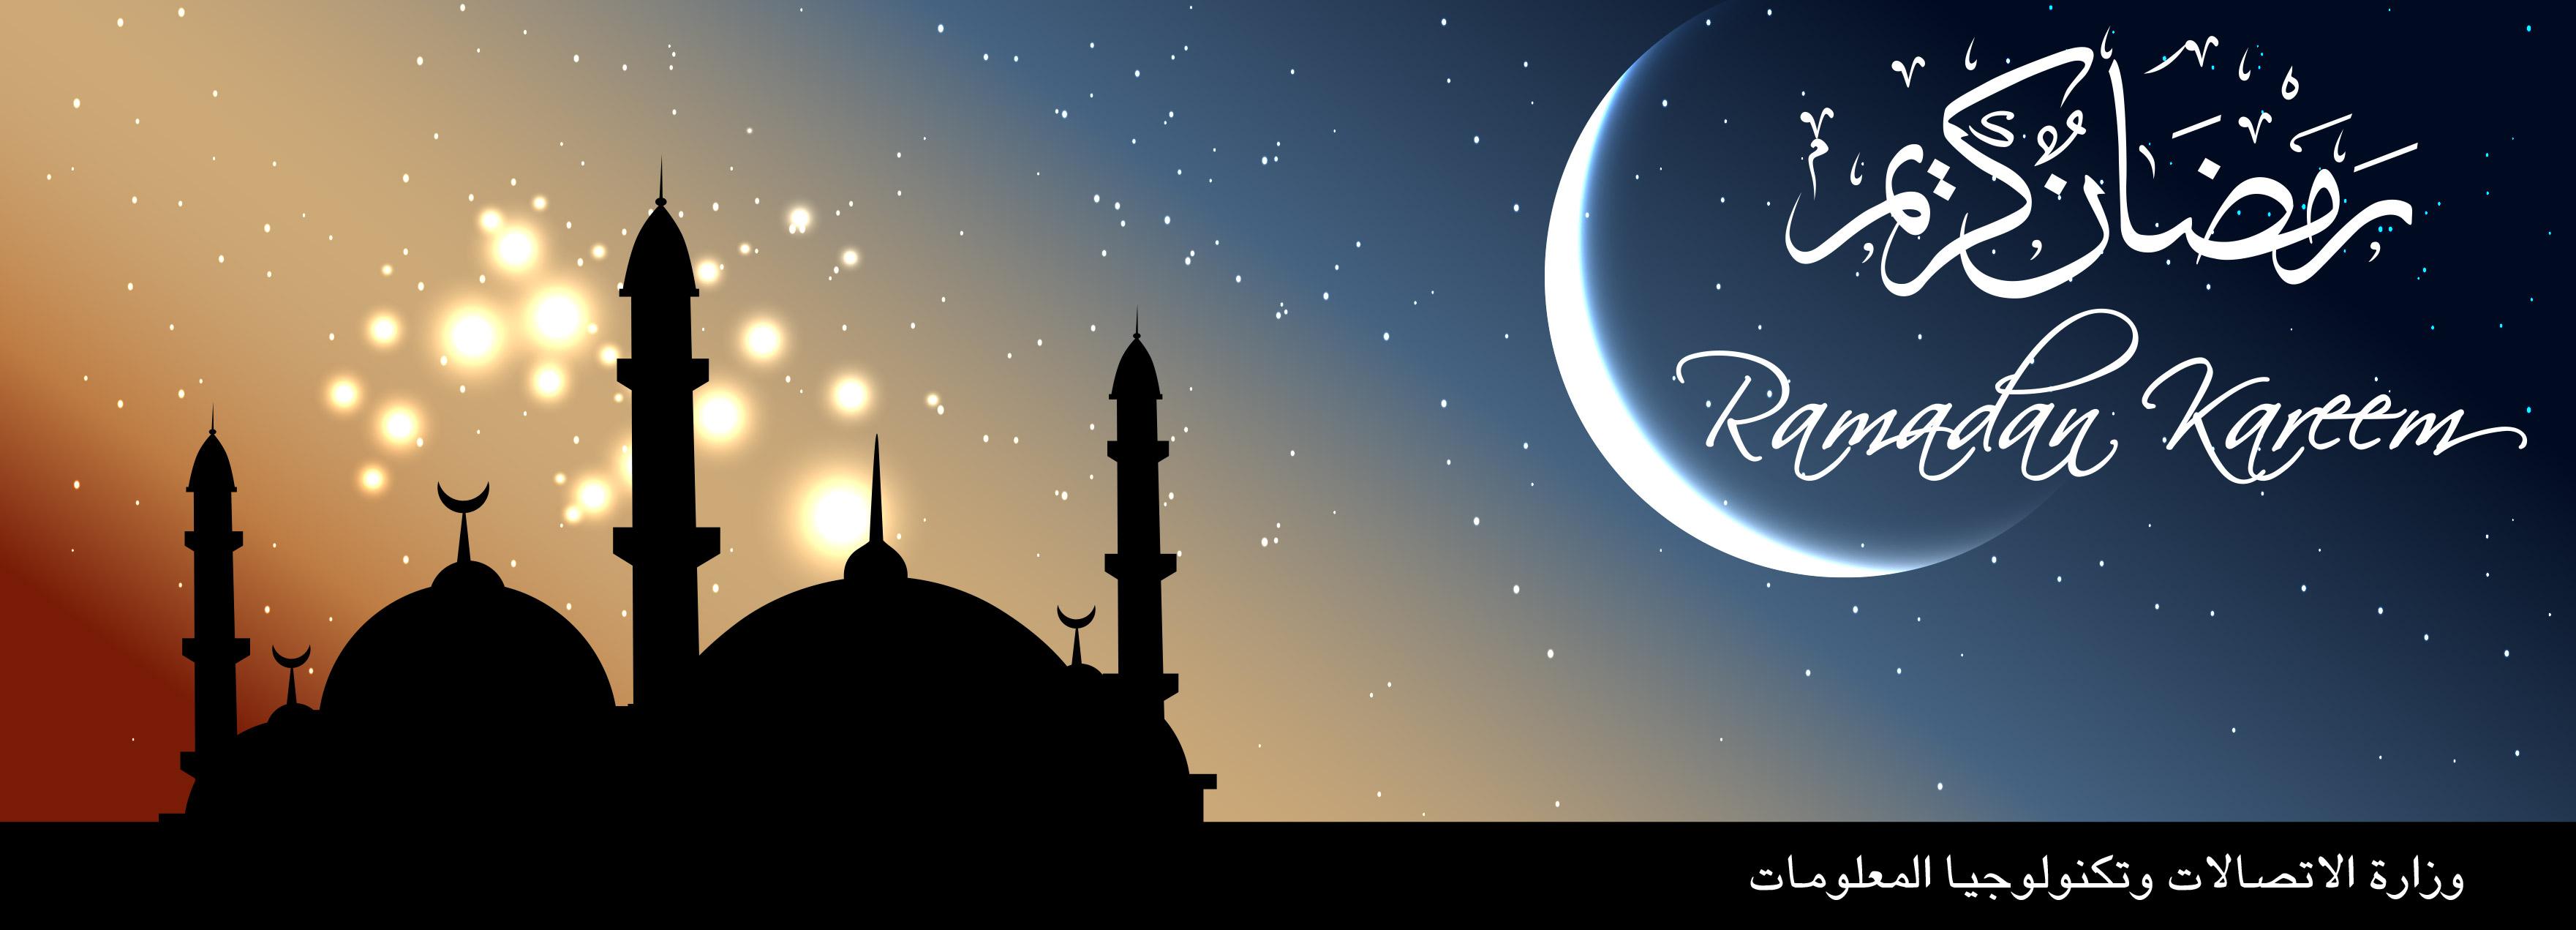 ramadan kareem images 10